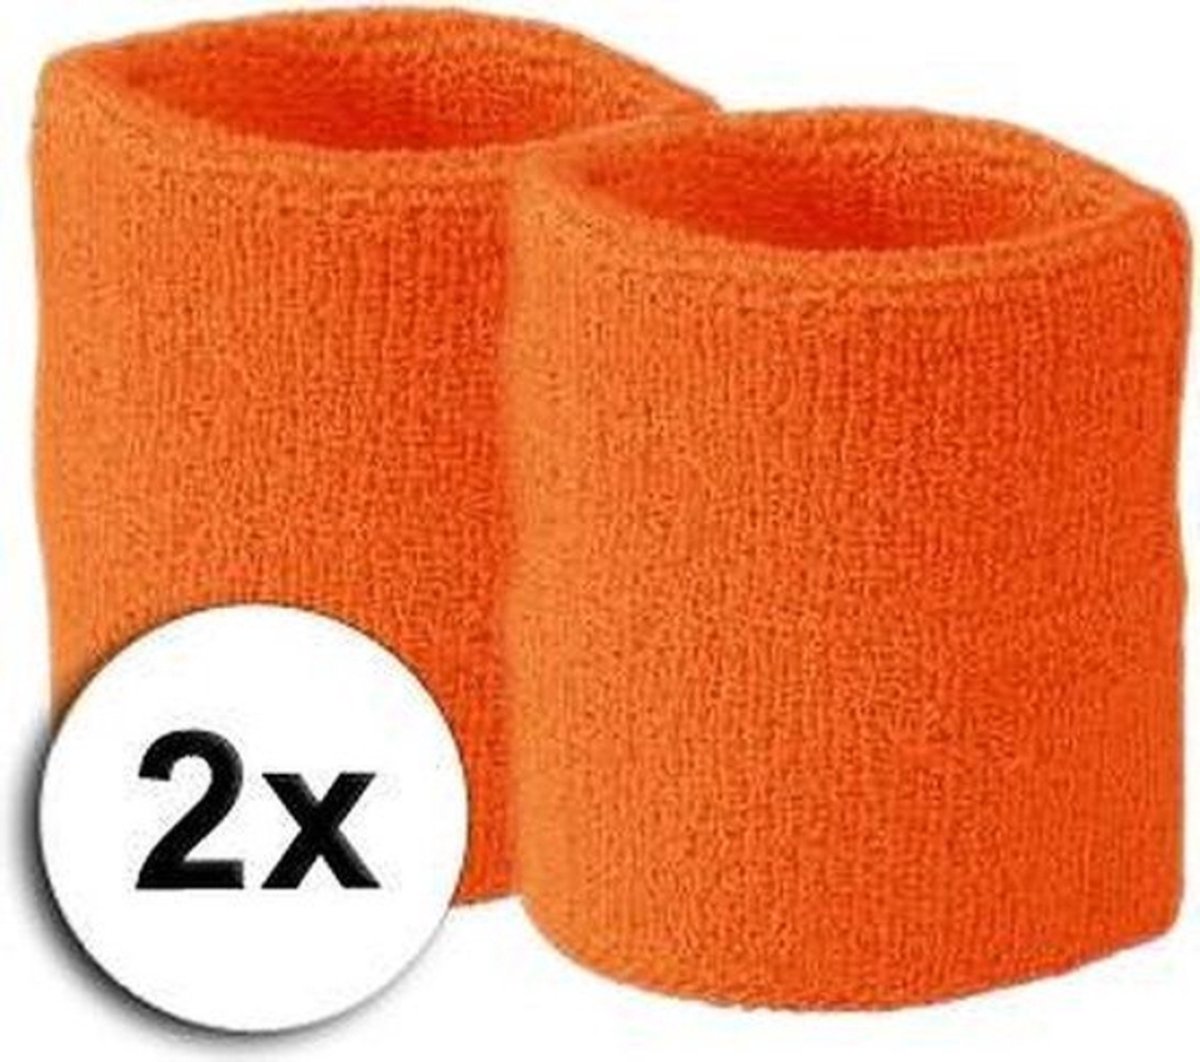 zweetbandjes oranje -foute party -oranje zweetband polsen -oranje -oranje band-wk - |zweetband voor sporten |Sport zweetband | oranje zweetband -oranje haarband -oranje banden | |oranje |Koningsdag | Haarverzorging |